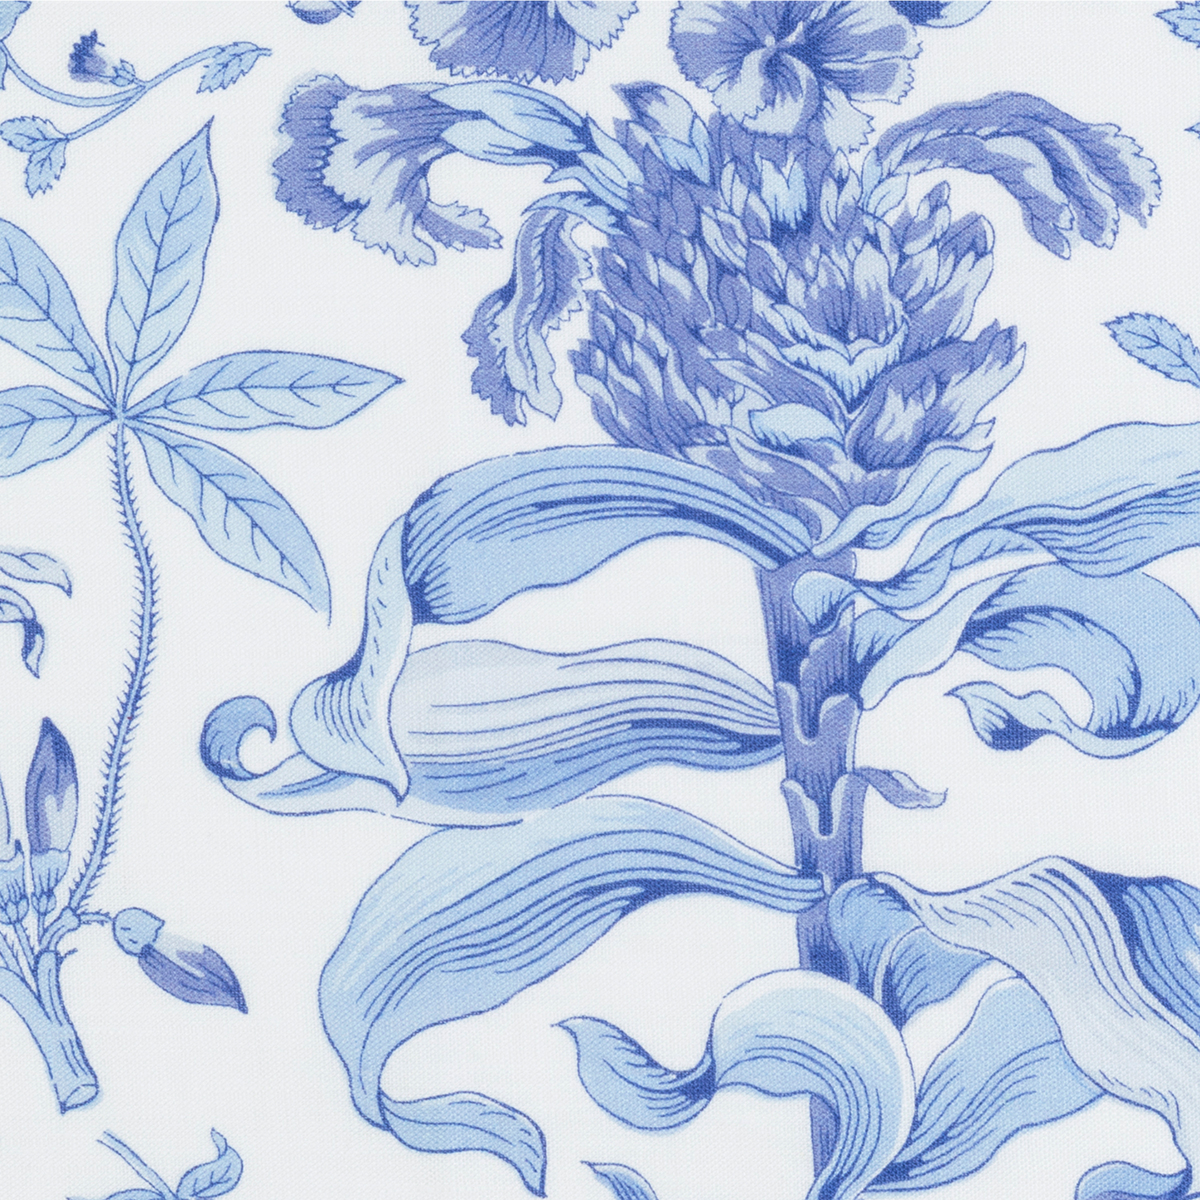 Fabric Closeup of Matouk Schumacher Pomegranate Linen Bedding in Porcelain Blue Color